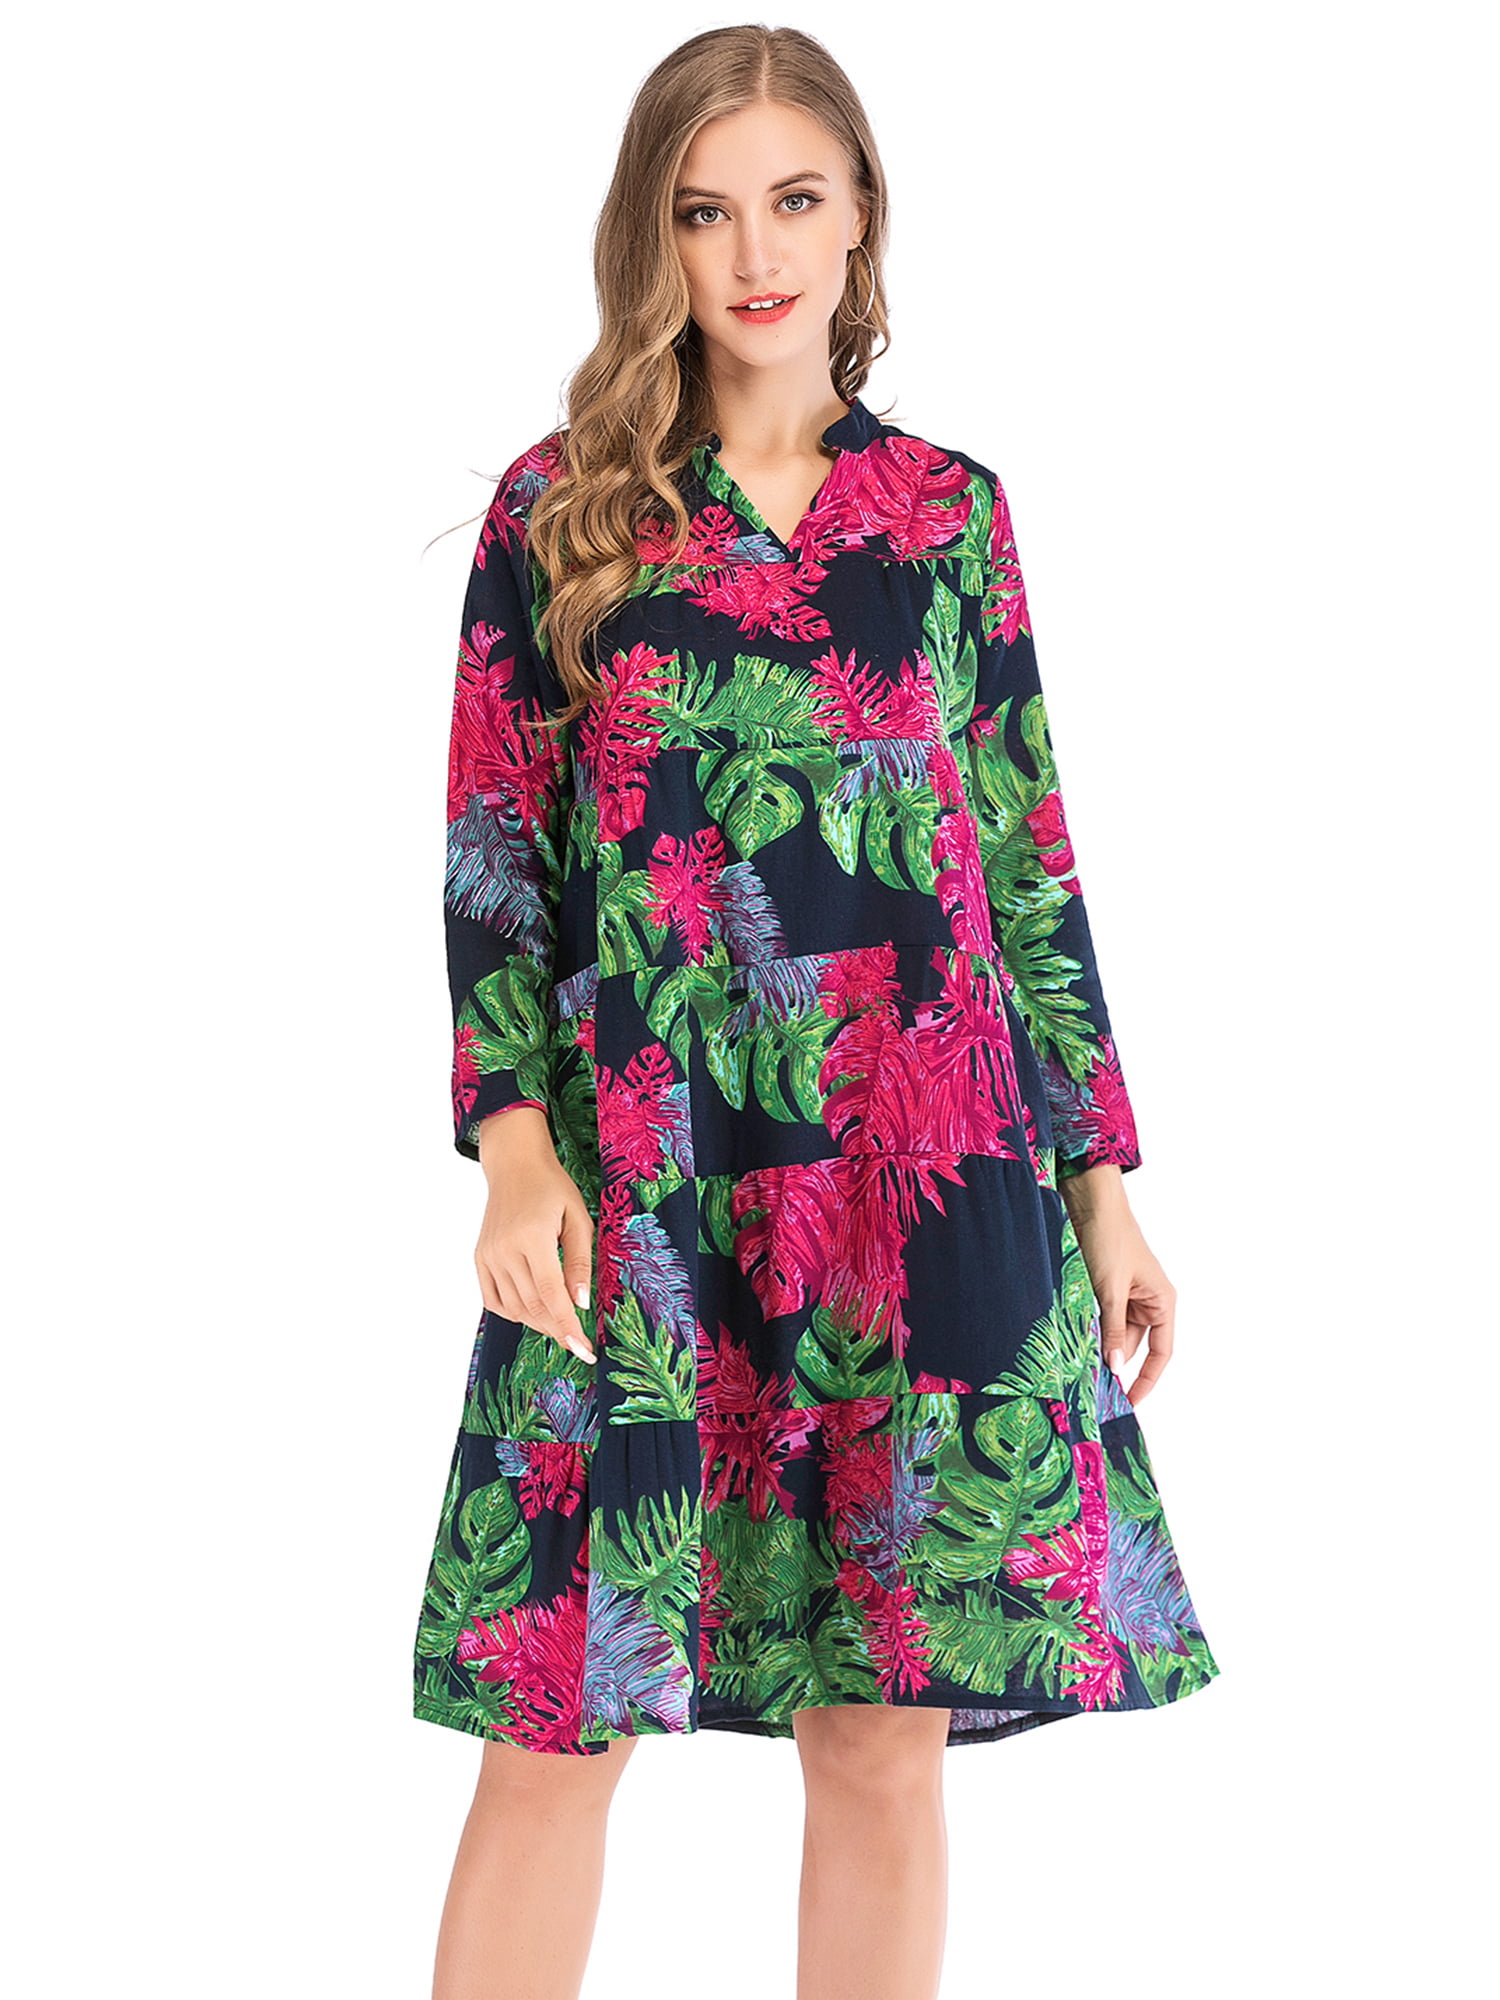 Onefa Womens Bohemian Plus Size Dress Vintage Print Sleeveless V Neck Casual Maxi Dress Gray, M